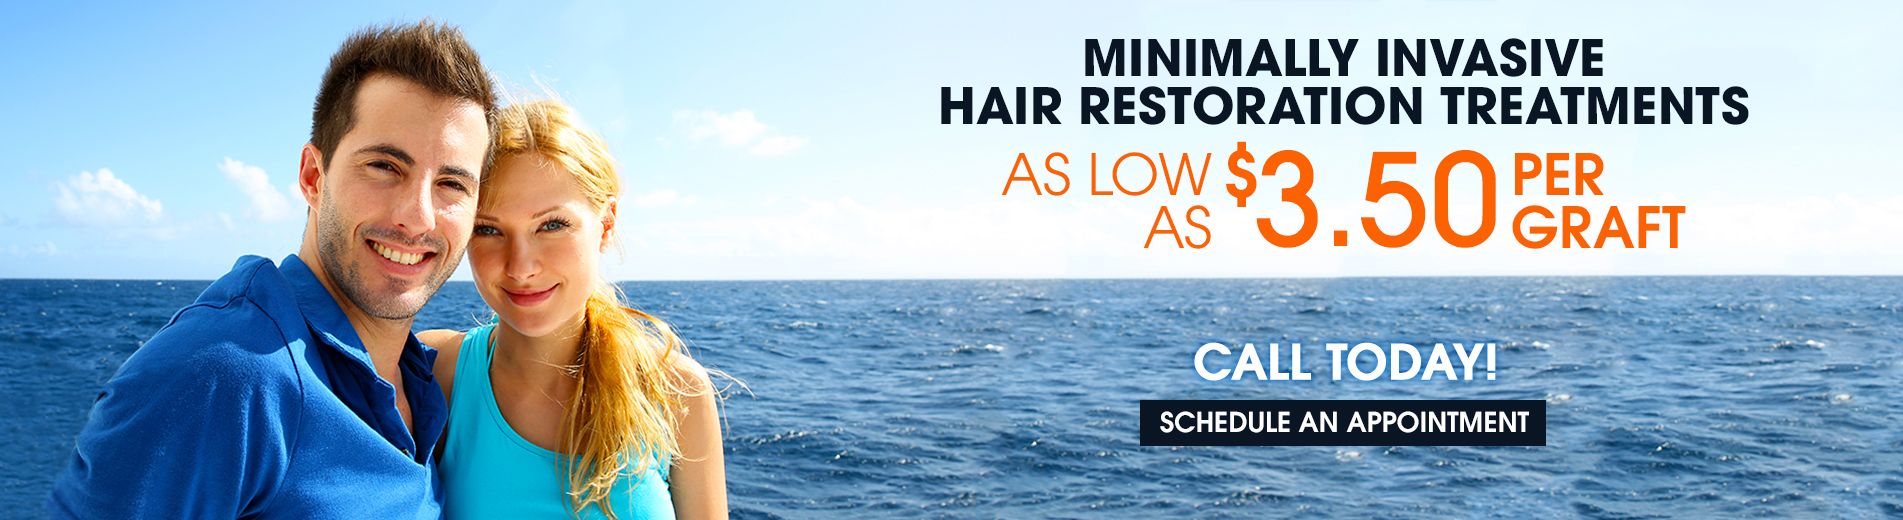 Minimally Invasive Hair Restoration Treatments